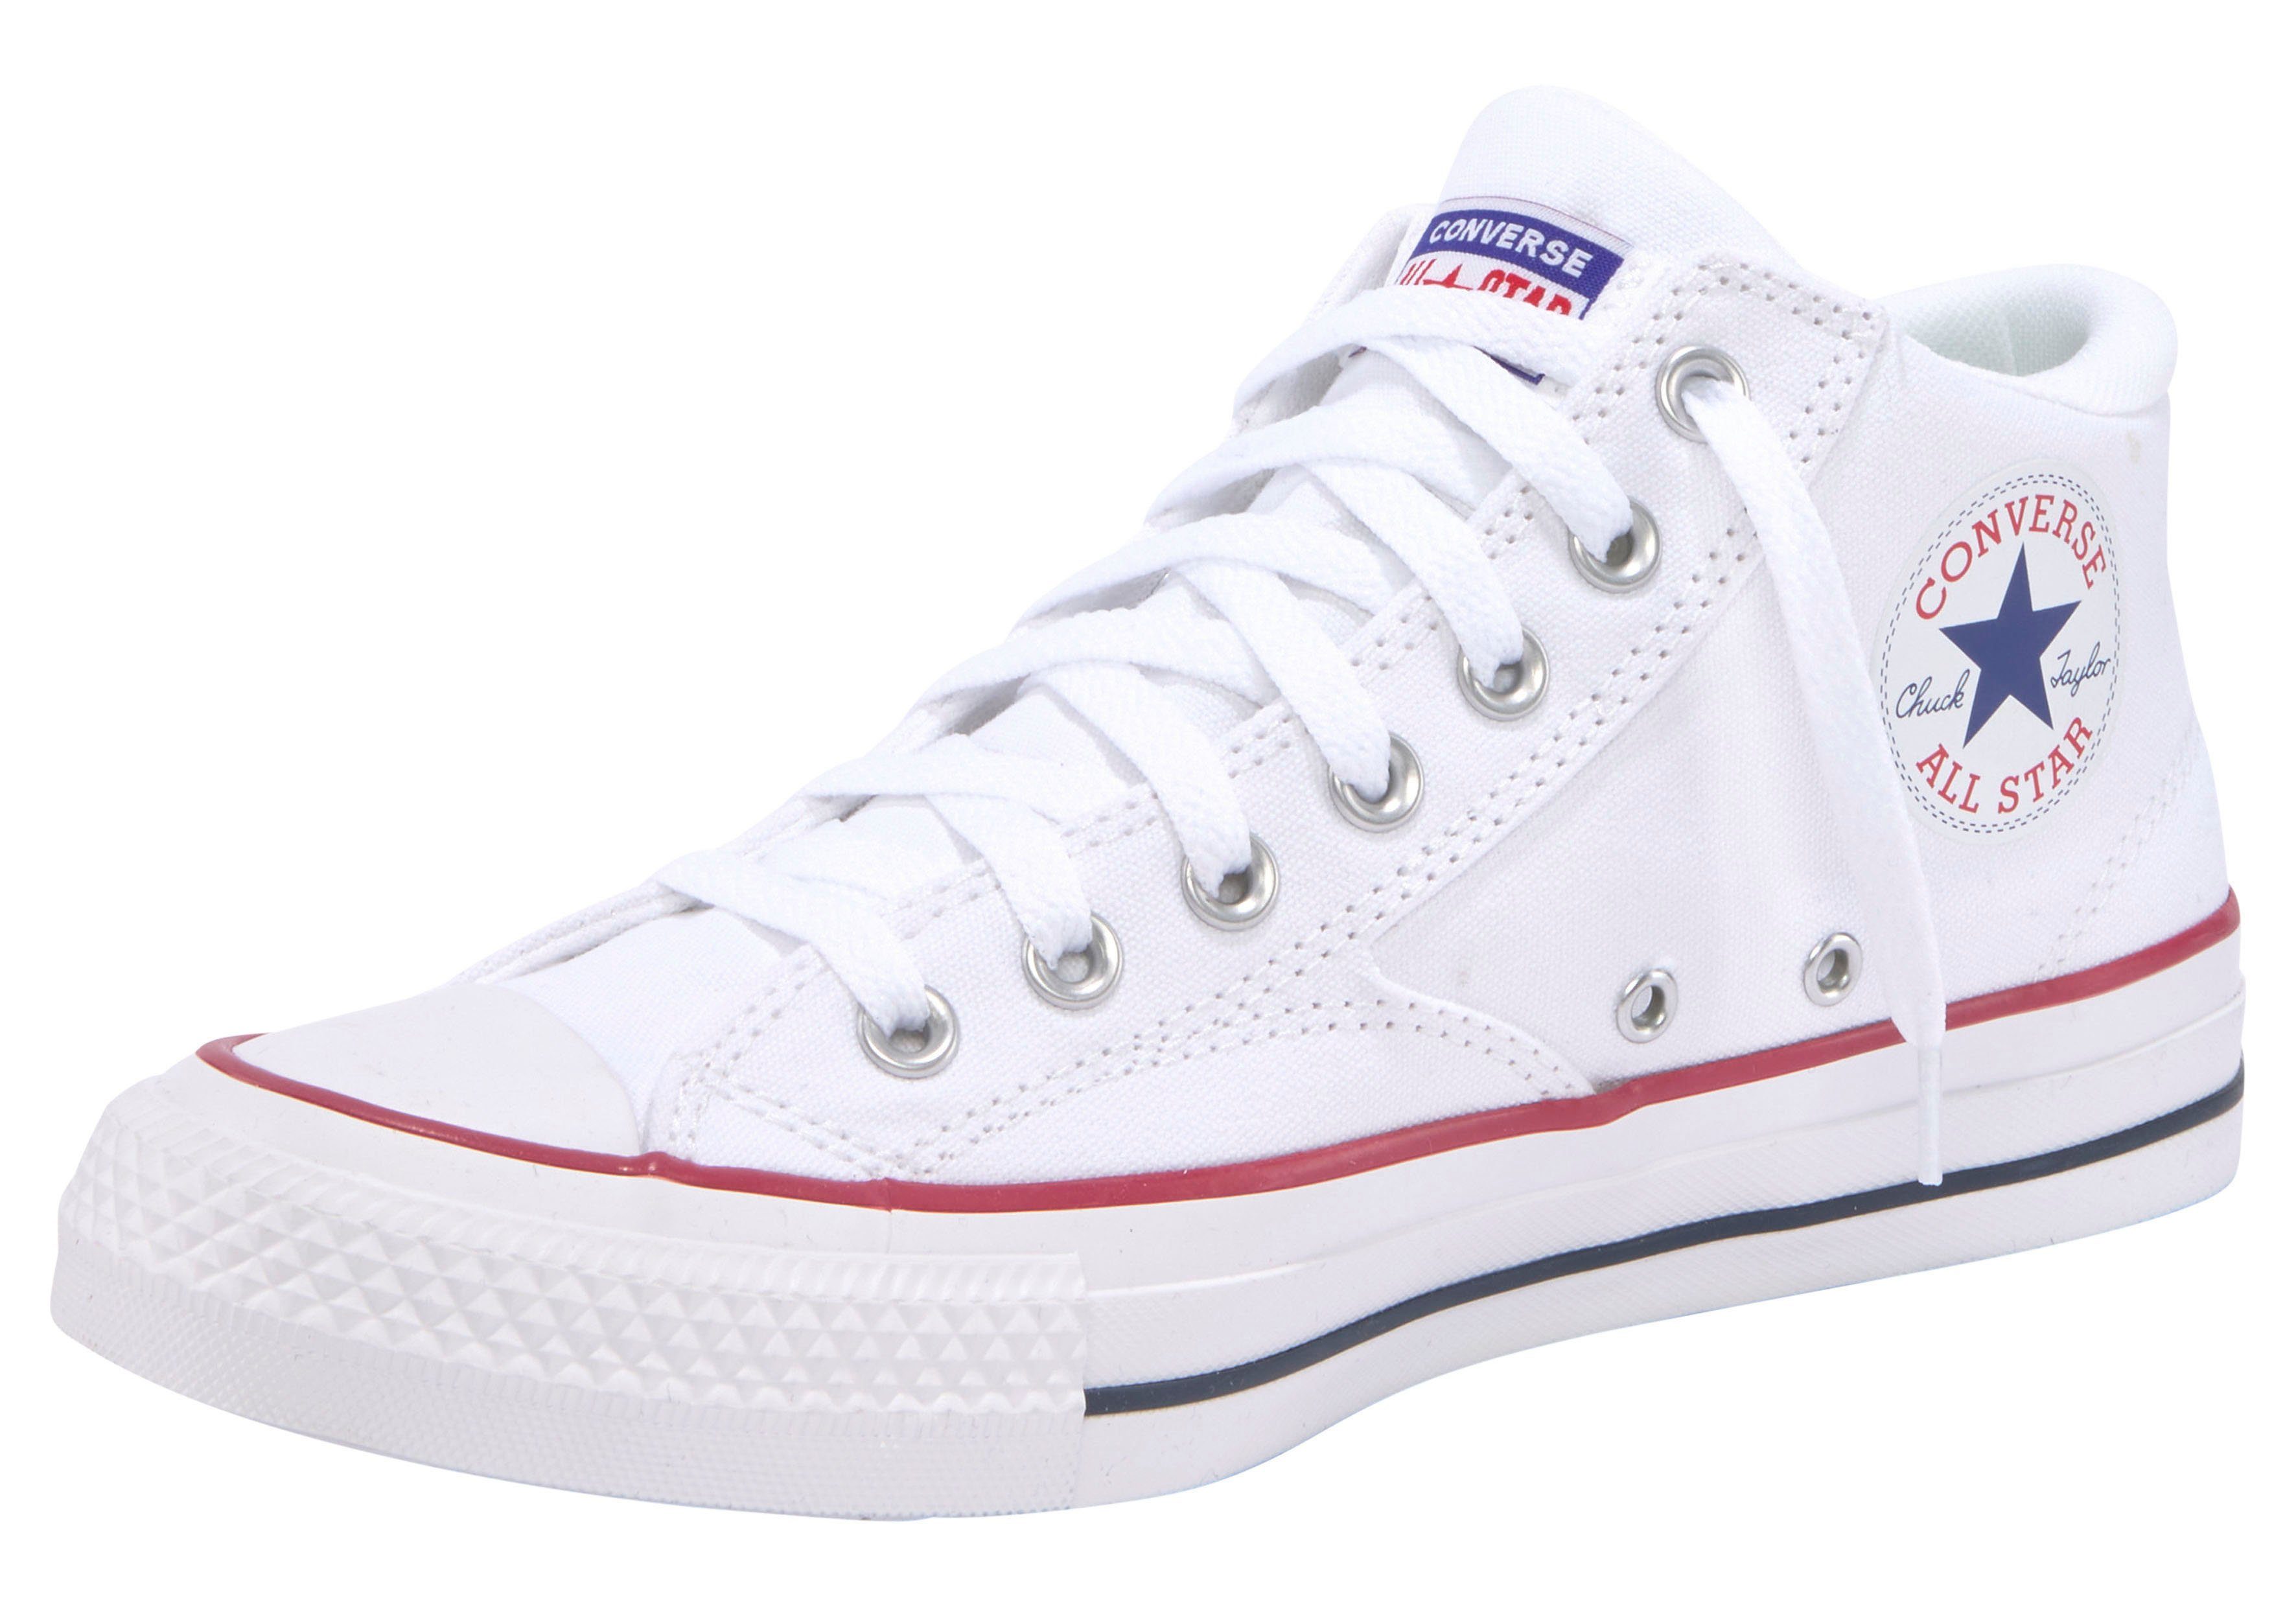 Converse »CHUCK TAYLOR ALL STAR MALDEN STREET« Sneaker online kaufen | OTTO